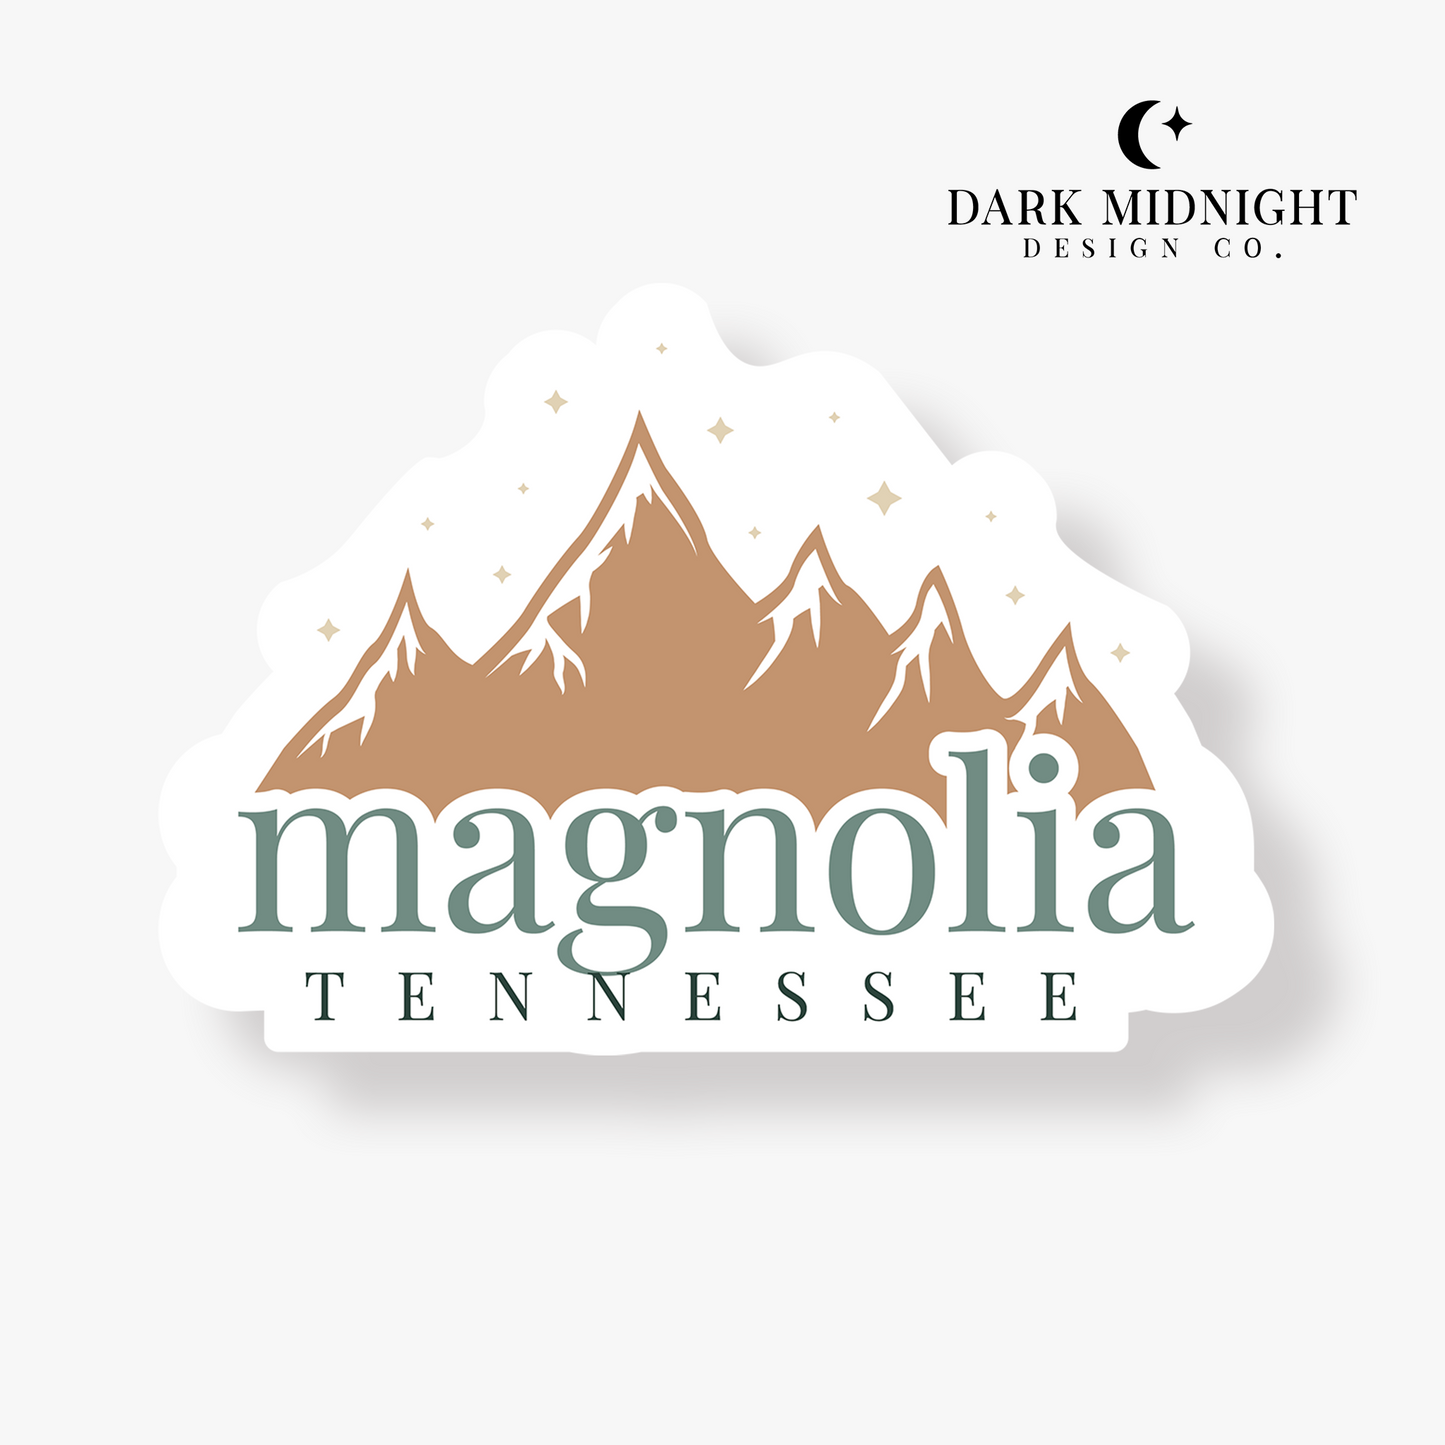 Magnolia Tennessee Sticker - Officially Licensed AJ Alexander Merch